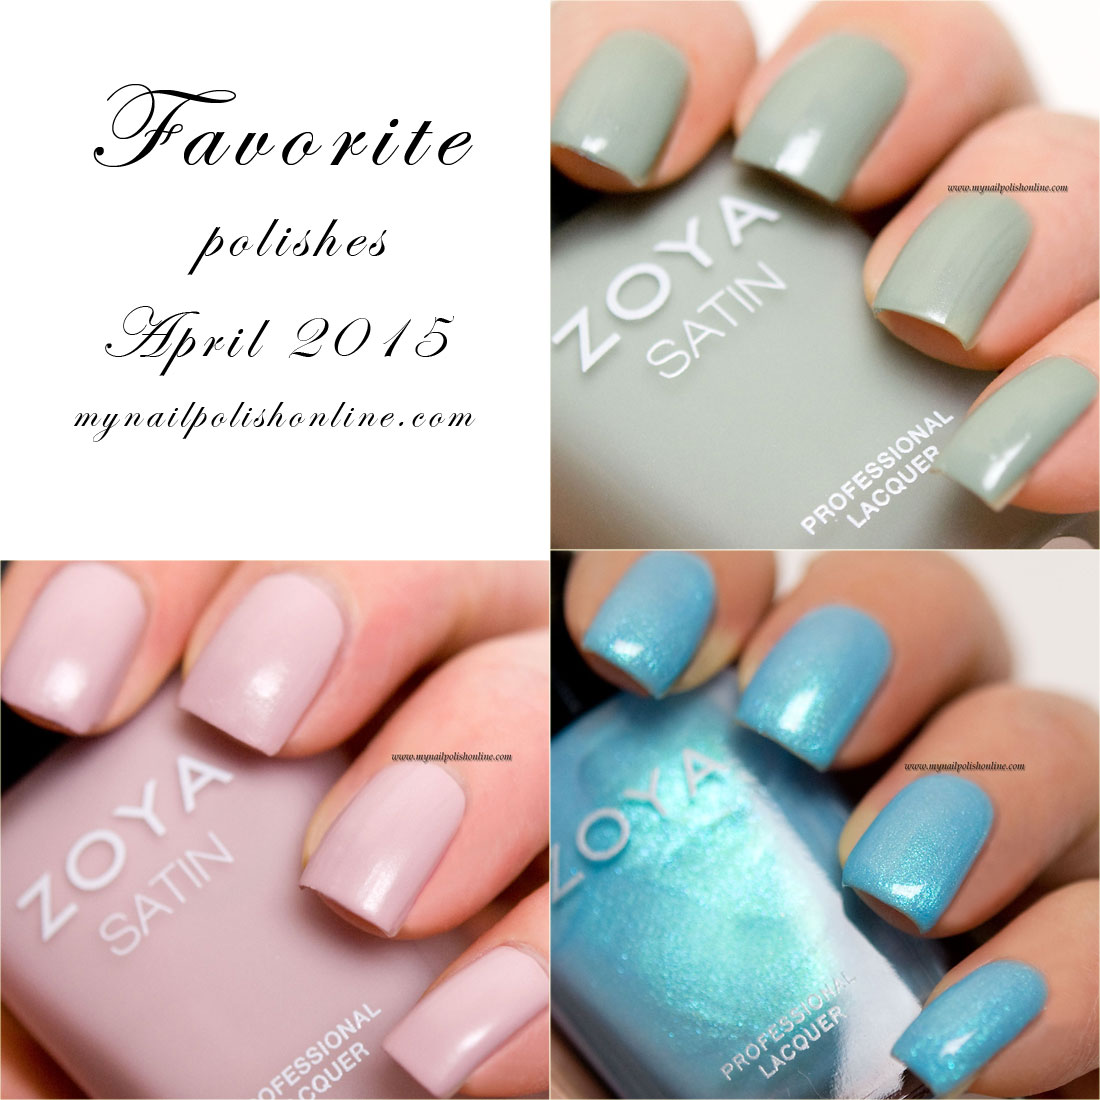 Favorite polishes for April 2015